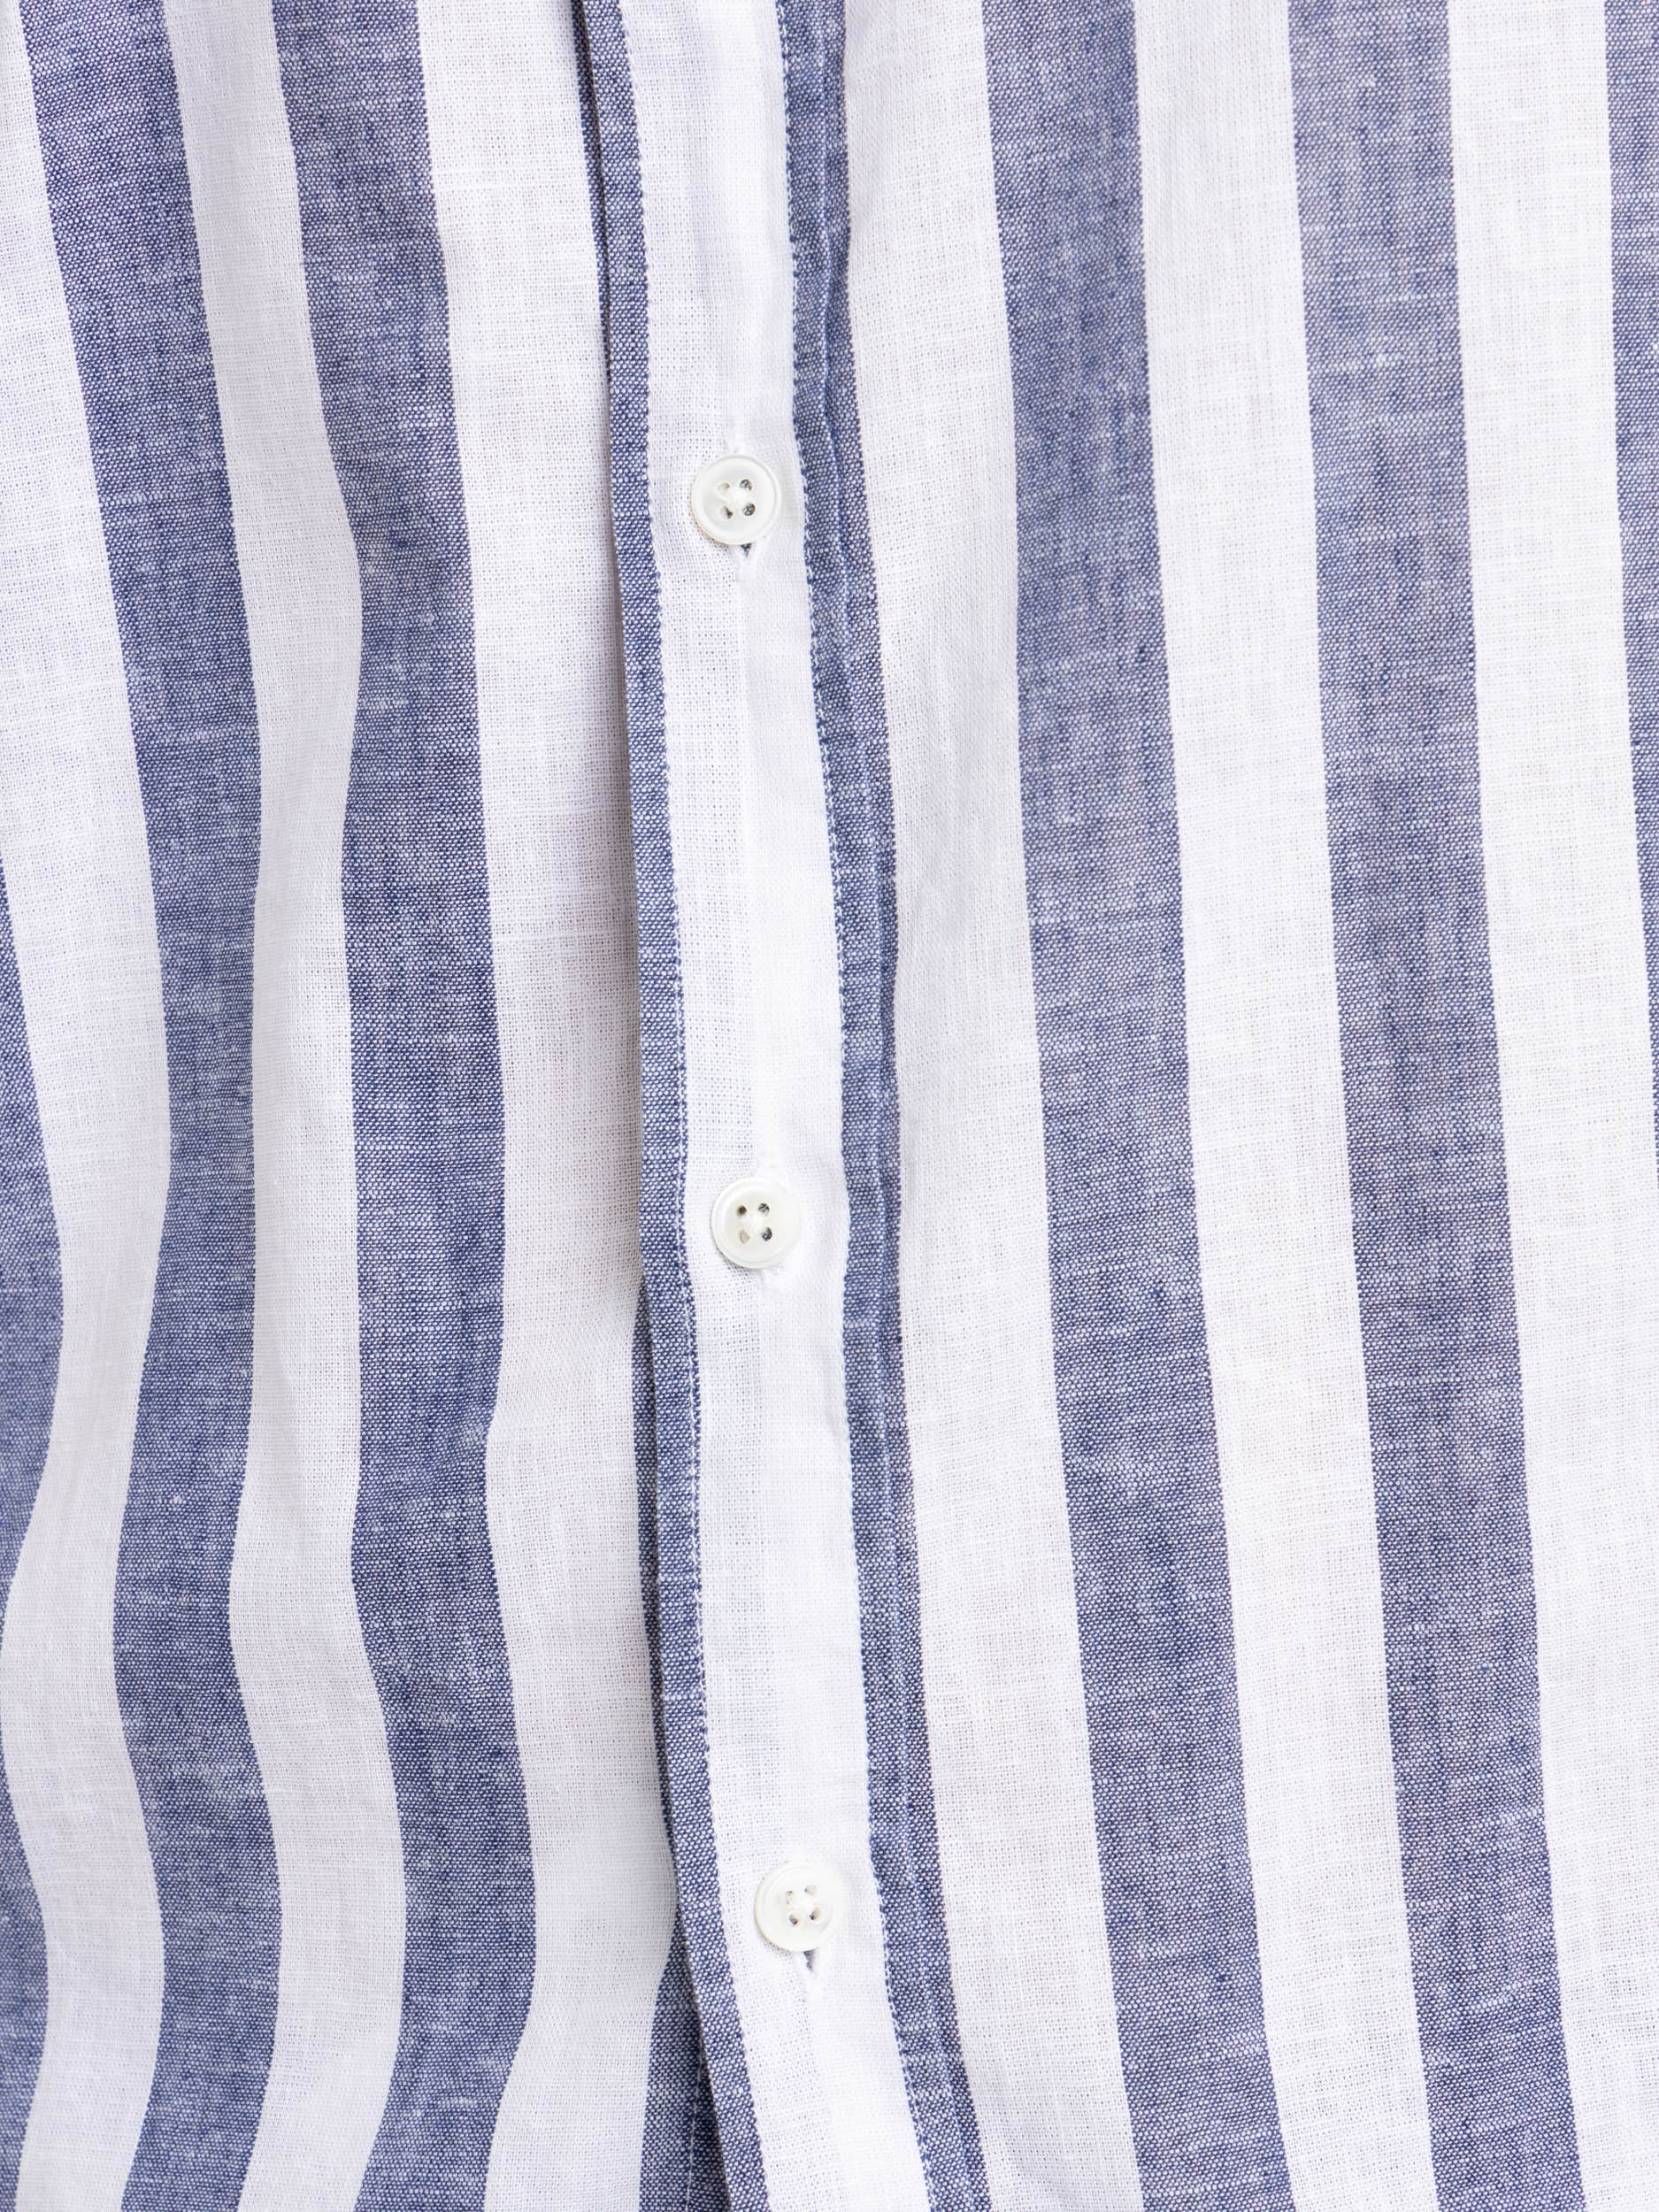 Navy/White Striped Shark Collar Shirt